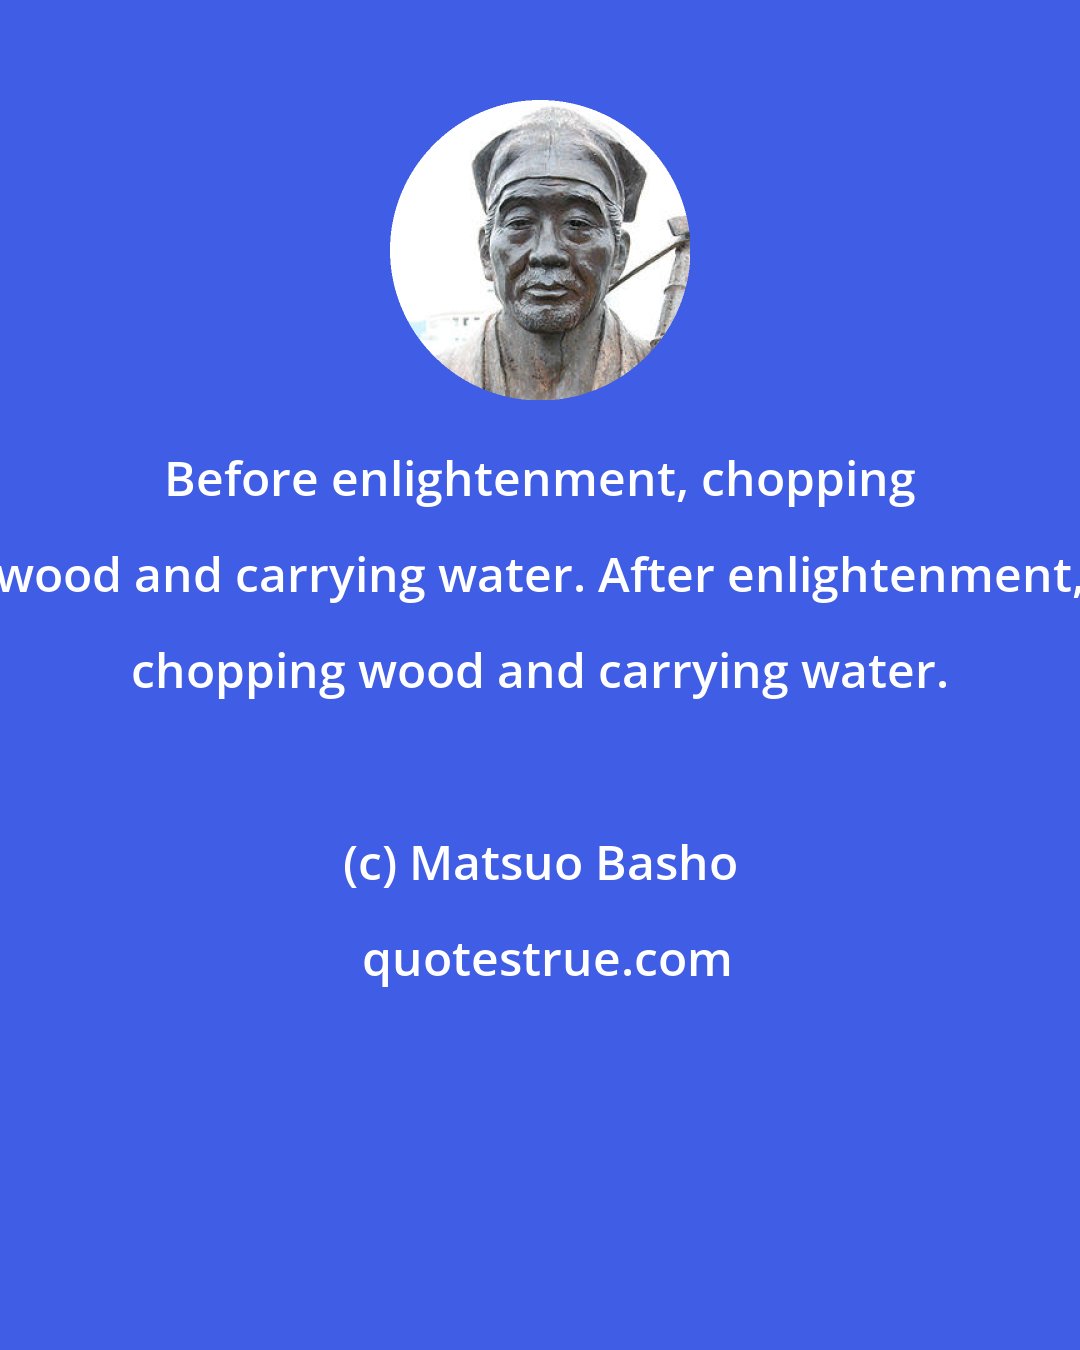 Matsuo Basho: Before enlightenment, chopping wood and carrying water. After enlightenment, chopping wood and carrying water.